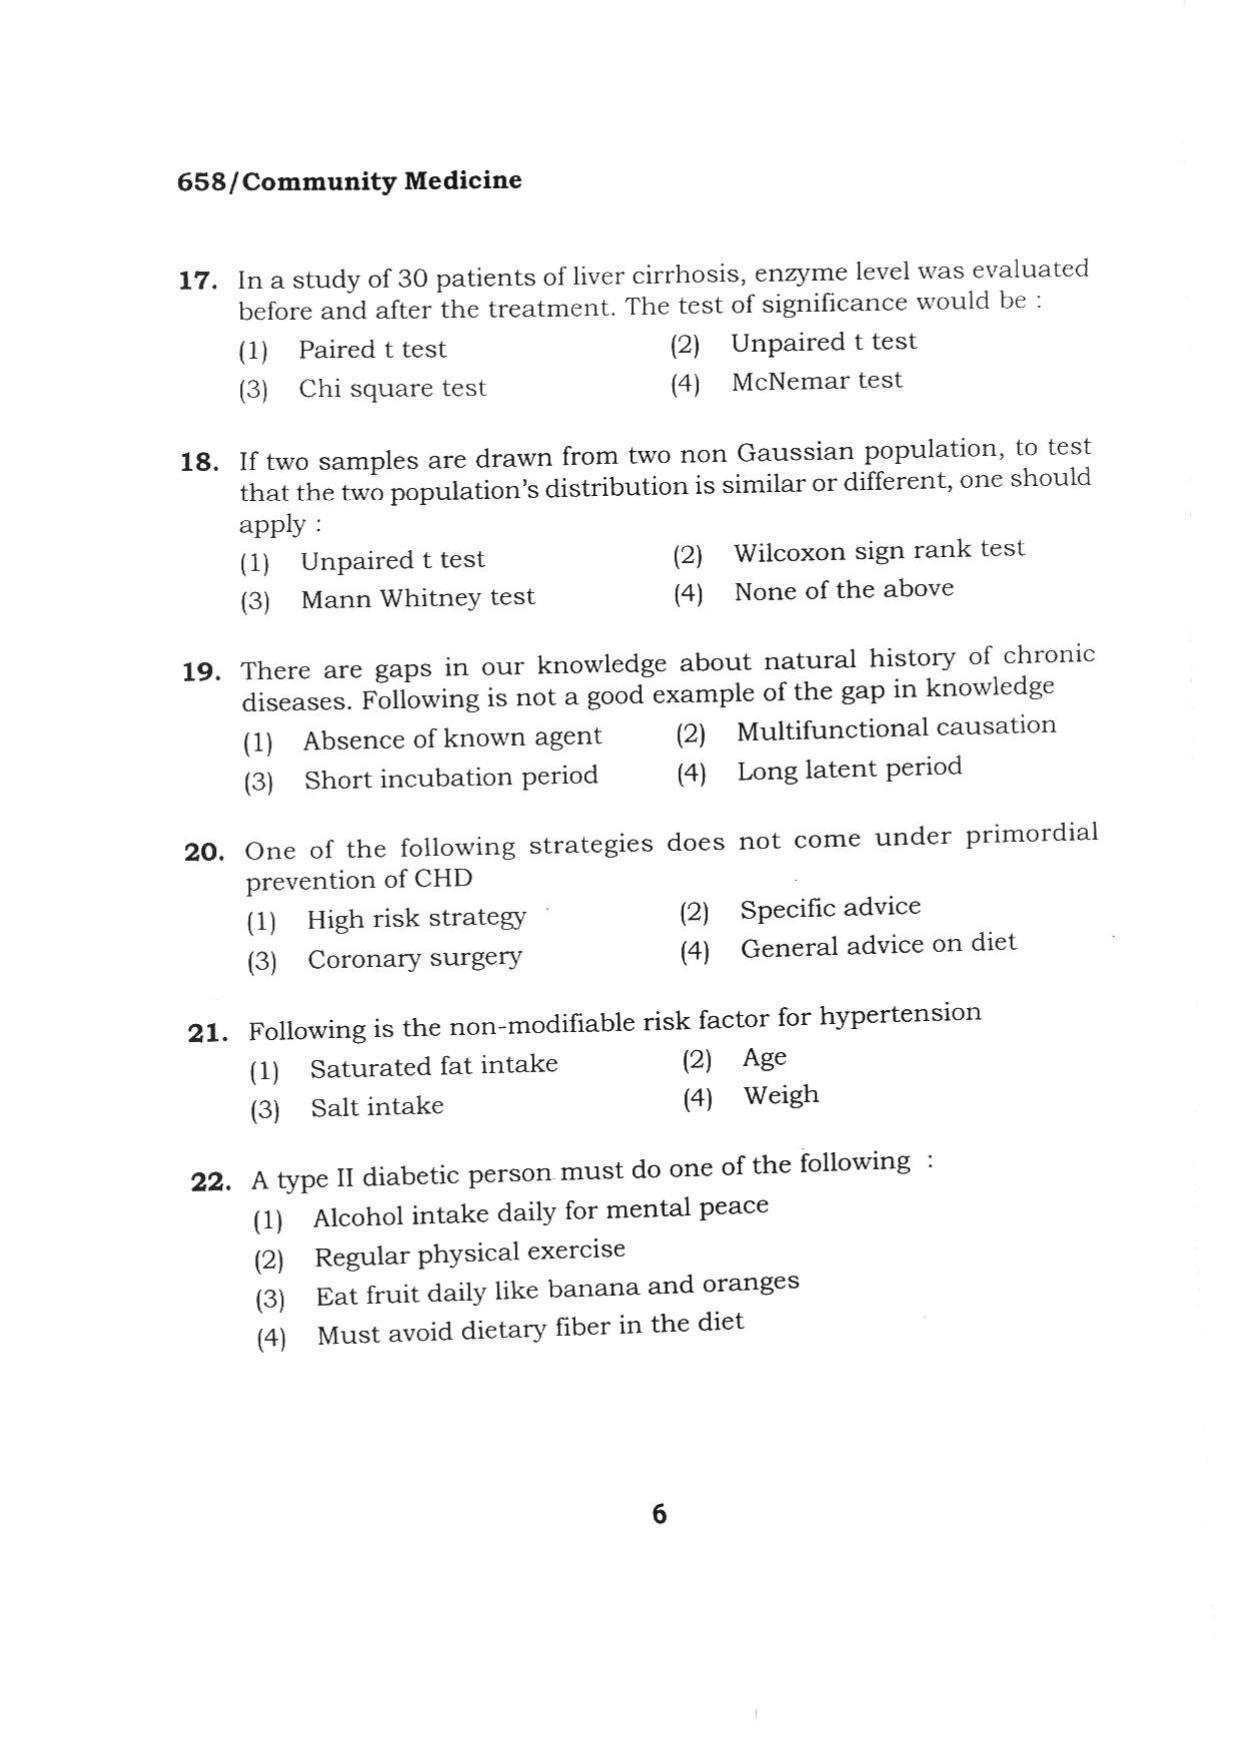 BHU RET COMMUNITY MEDICINE 2015 Question Paper - Page 6